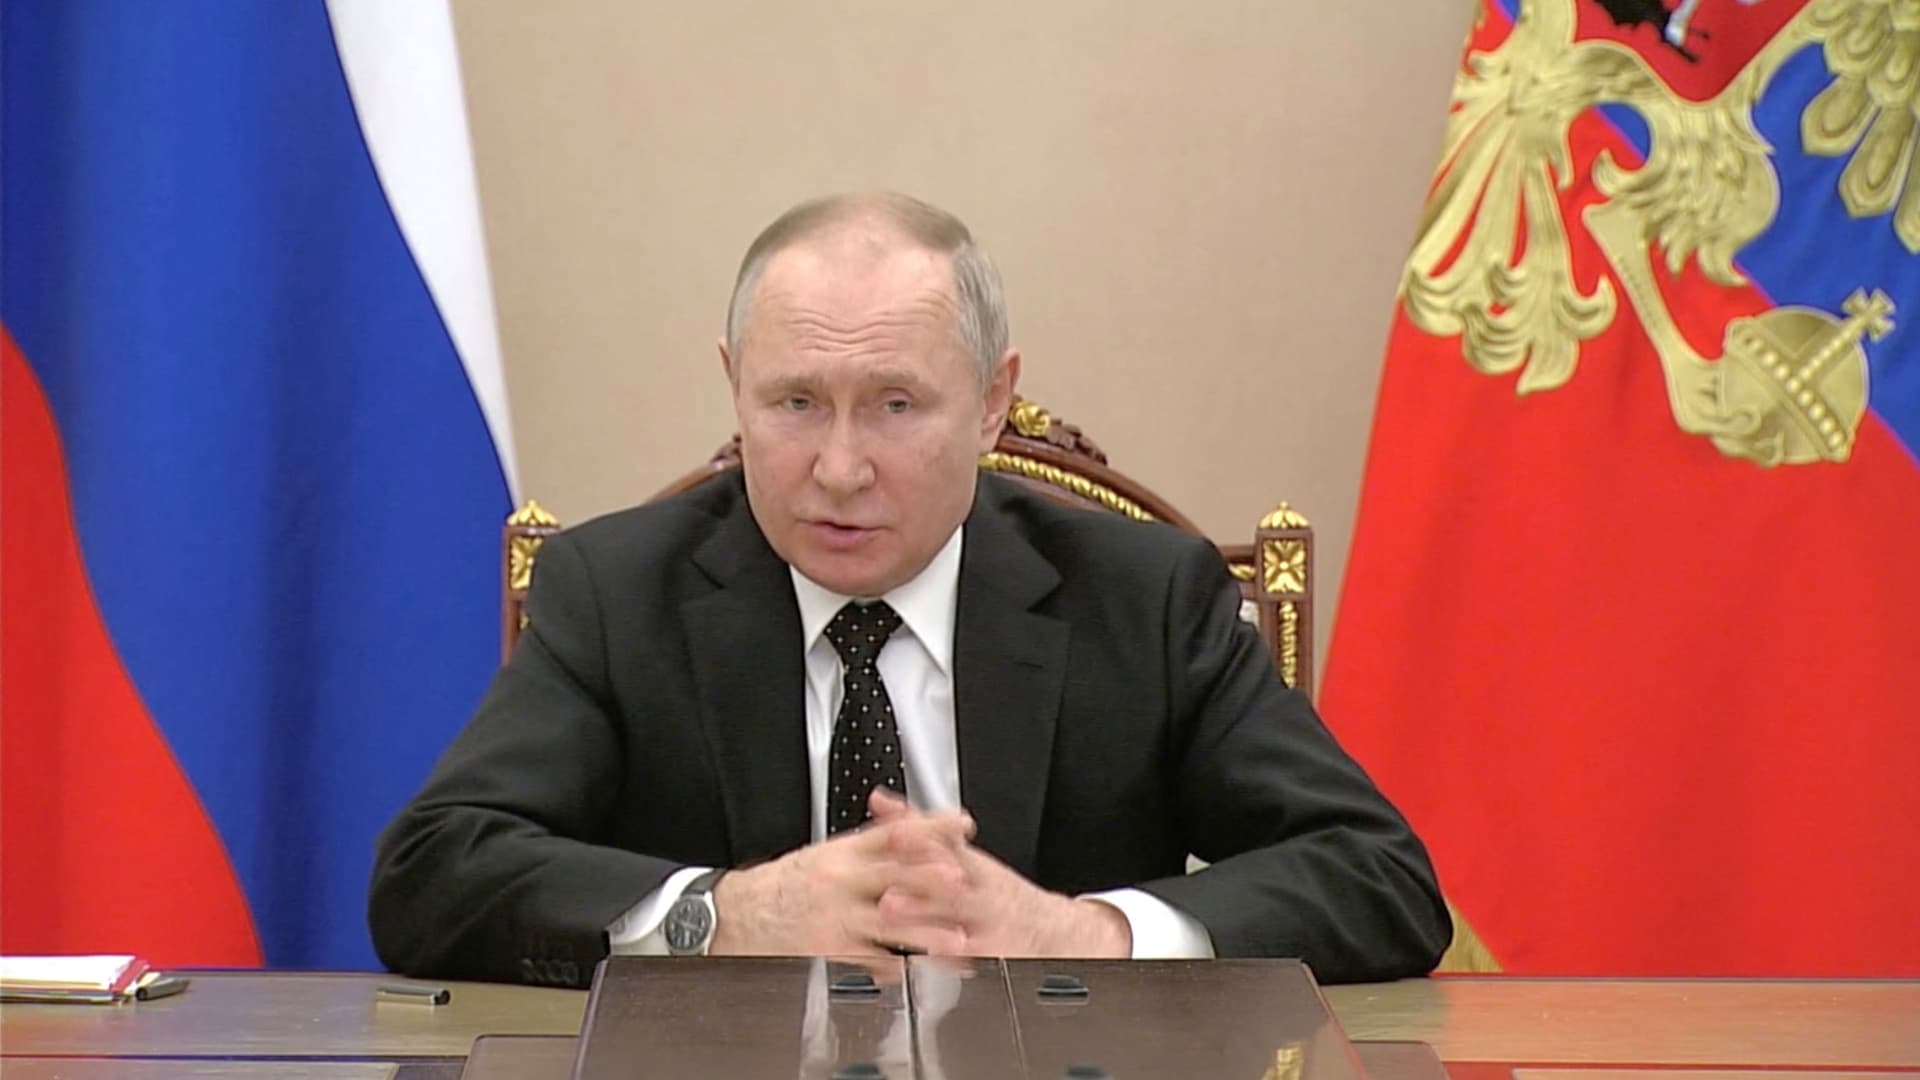 ‘Scum and traitors’: Under pressure over Ukraine Putin turns his ire on Russians – CNBC